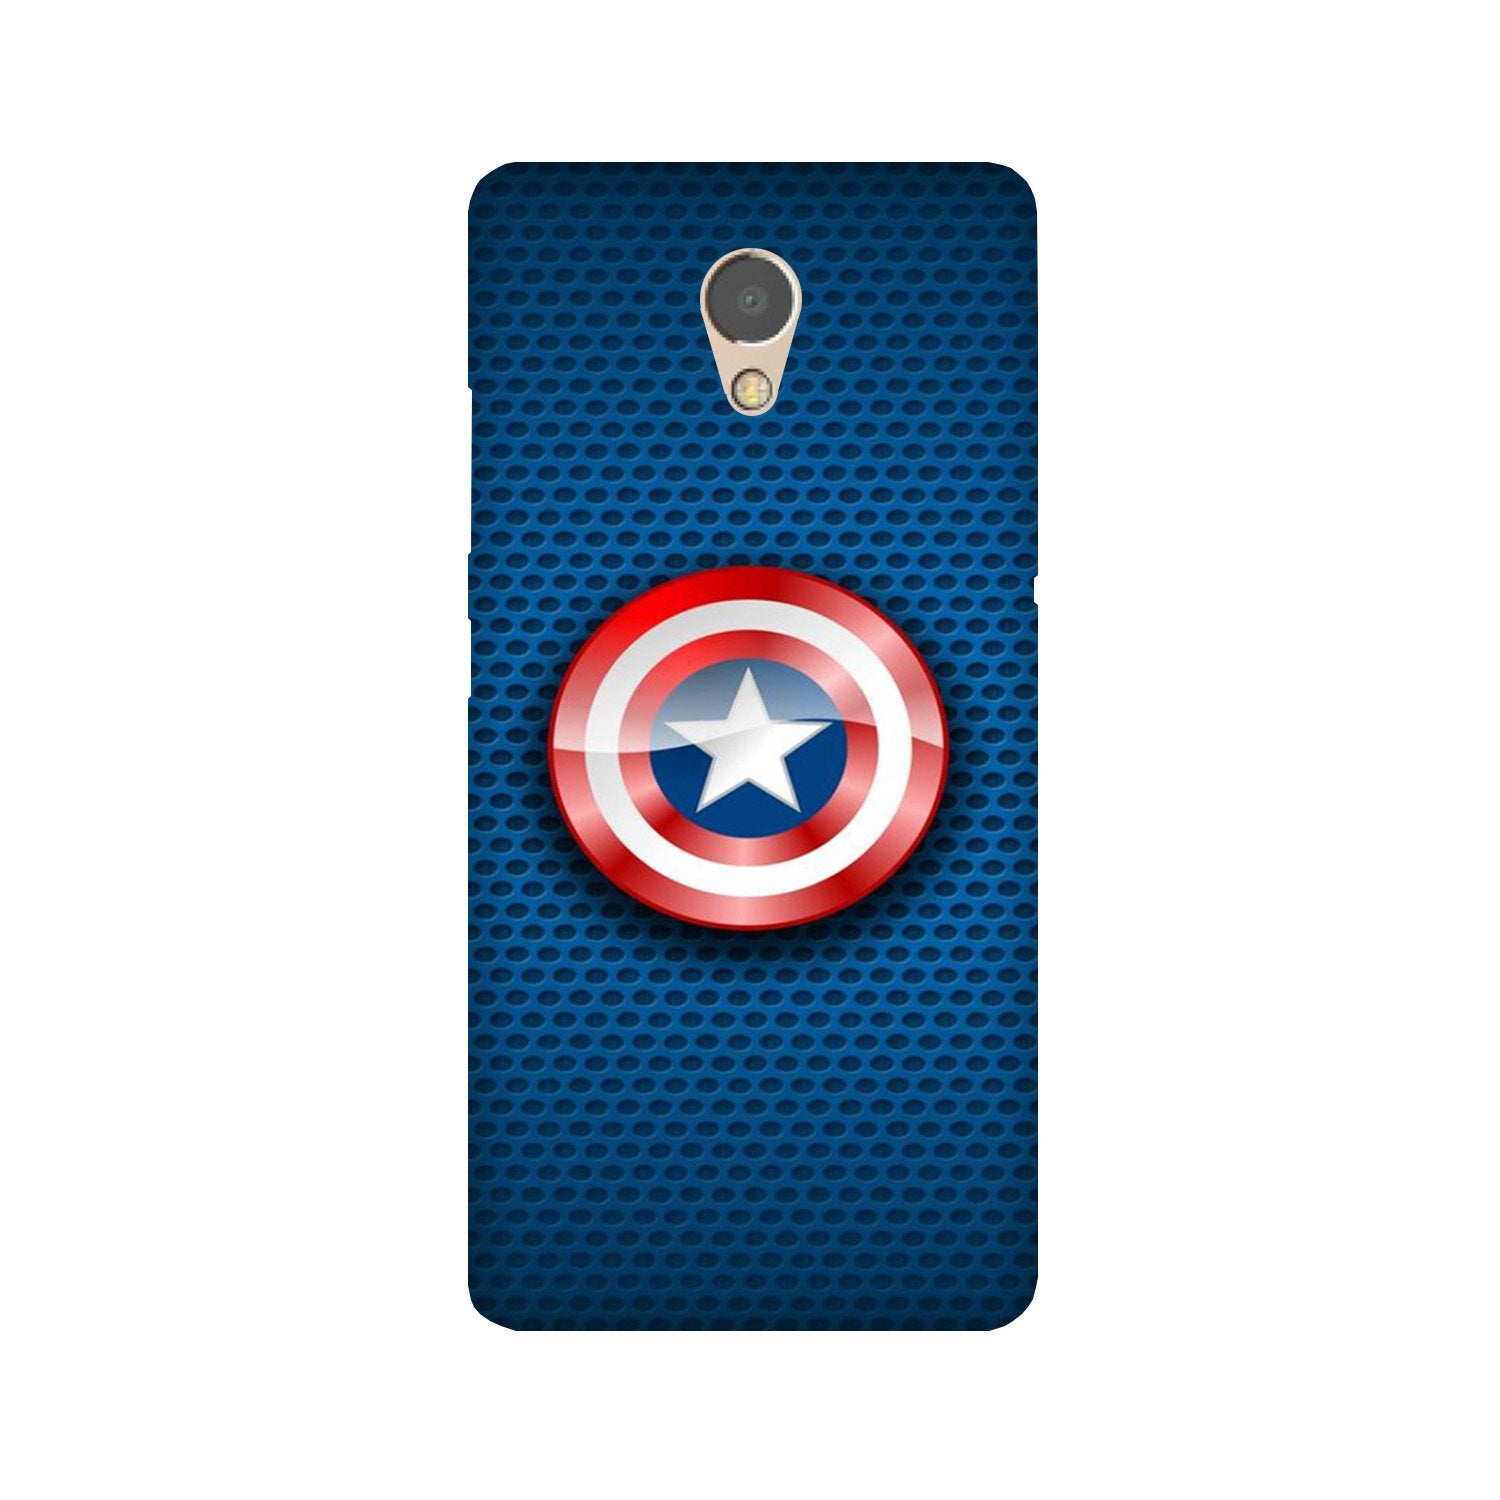 Captain America Shield Case for Lenovo P2 (Design No. 253)